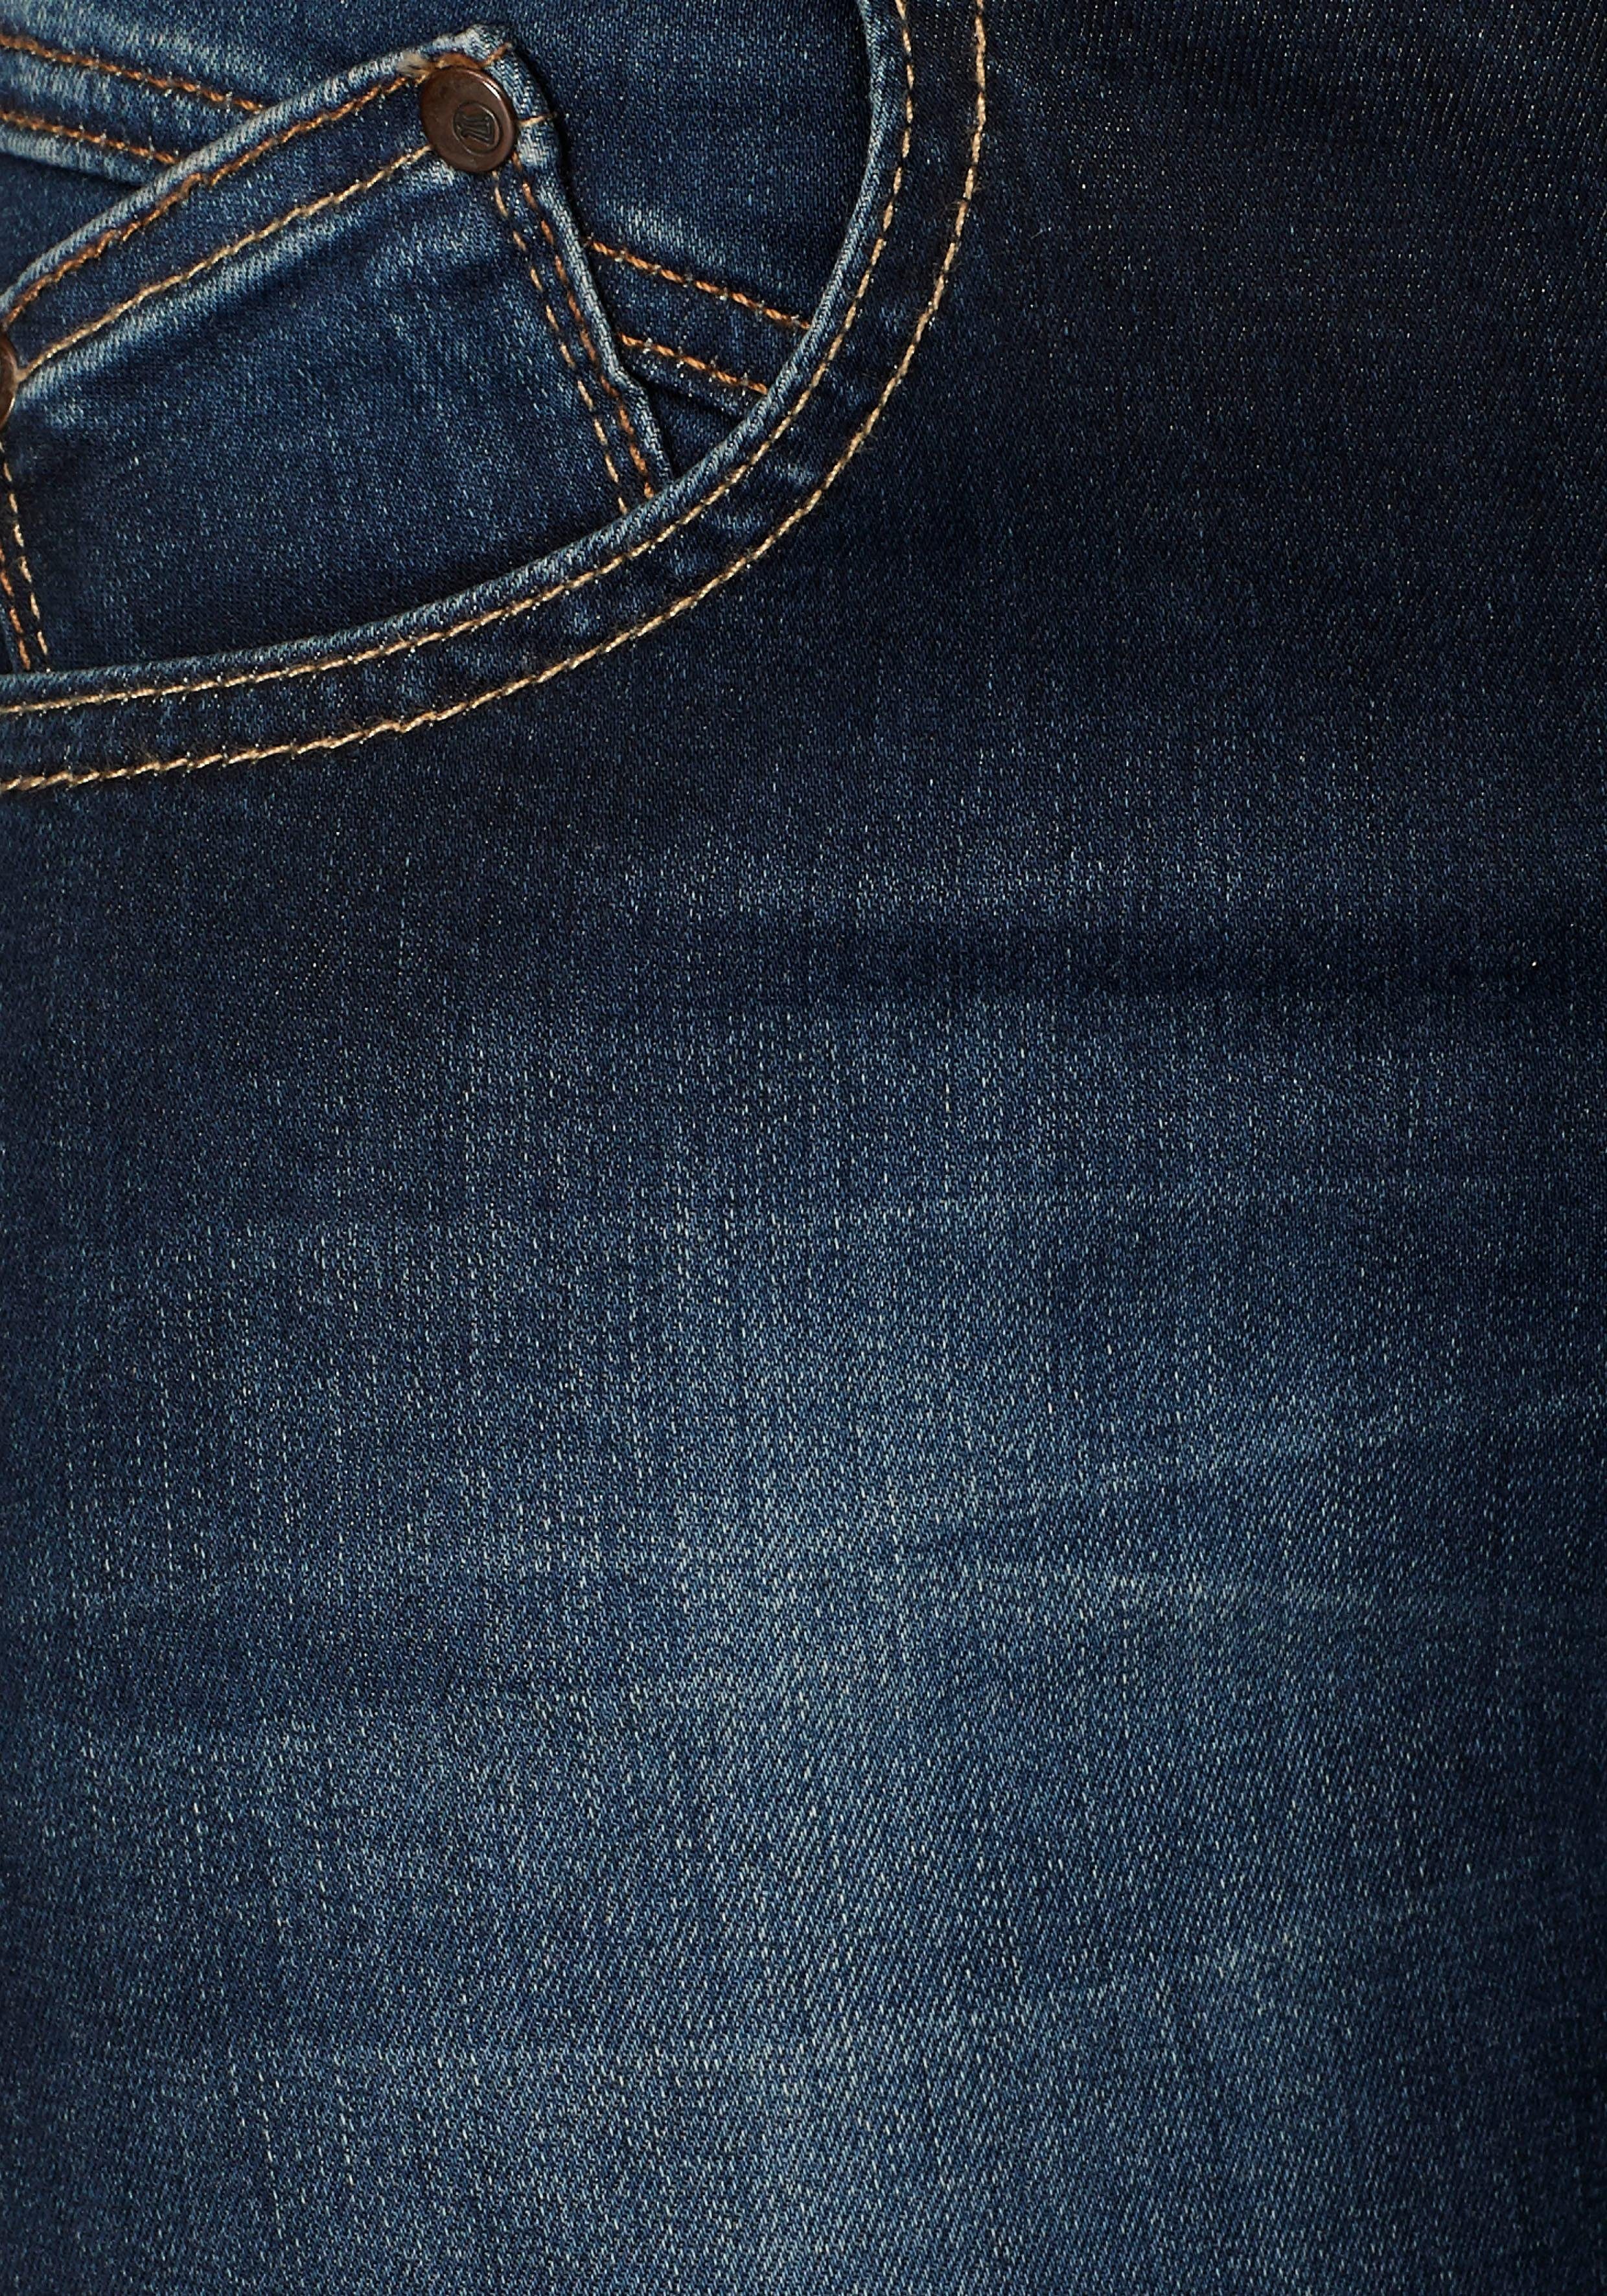 Herrlicher Slim-fit-Jeans GILA SLIM Powerstretch washed Waist blue Low REUSED